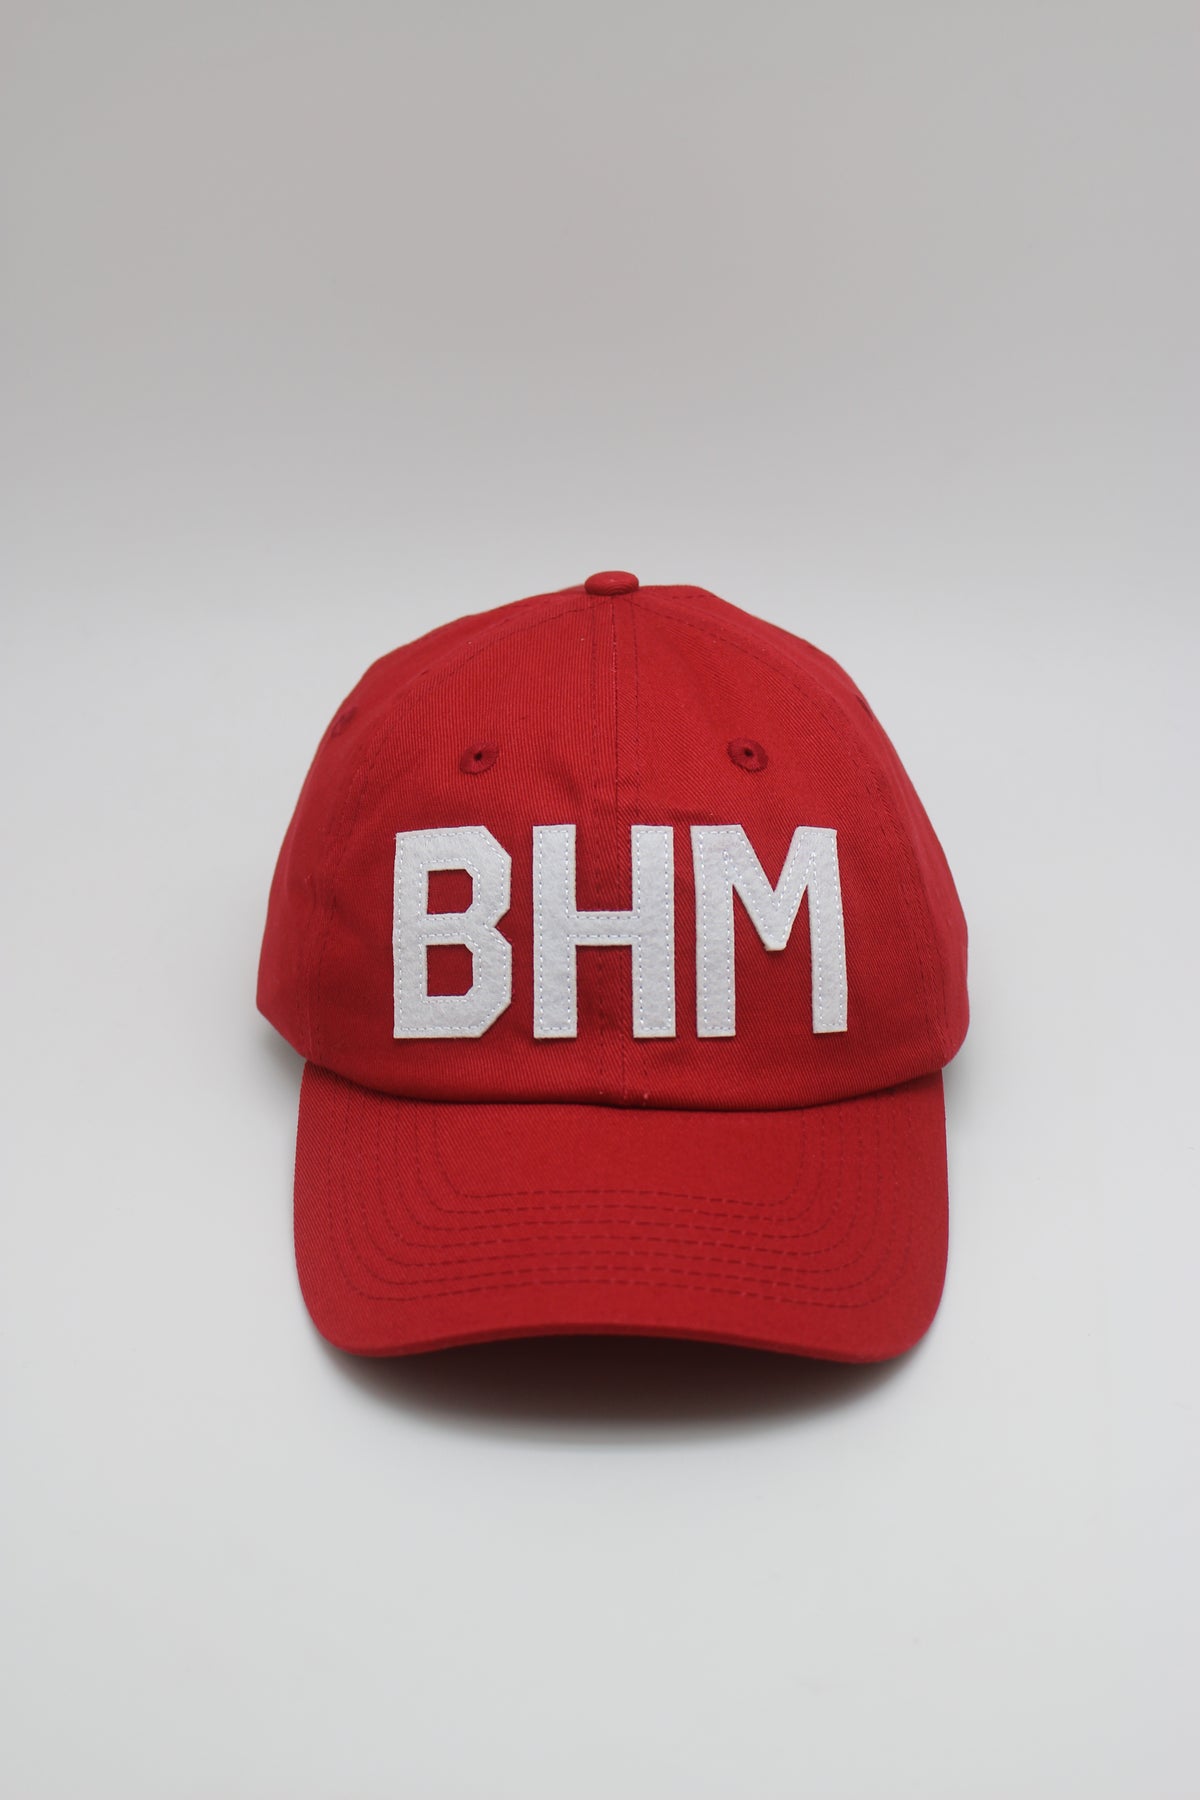 BHM - Birmingham, AL Hat